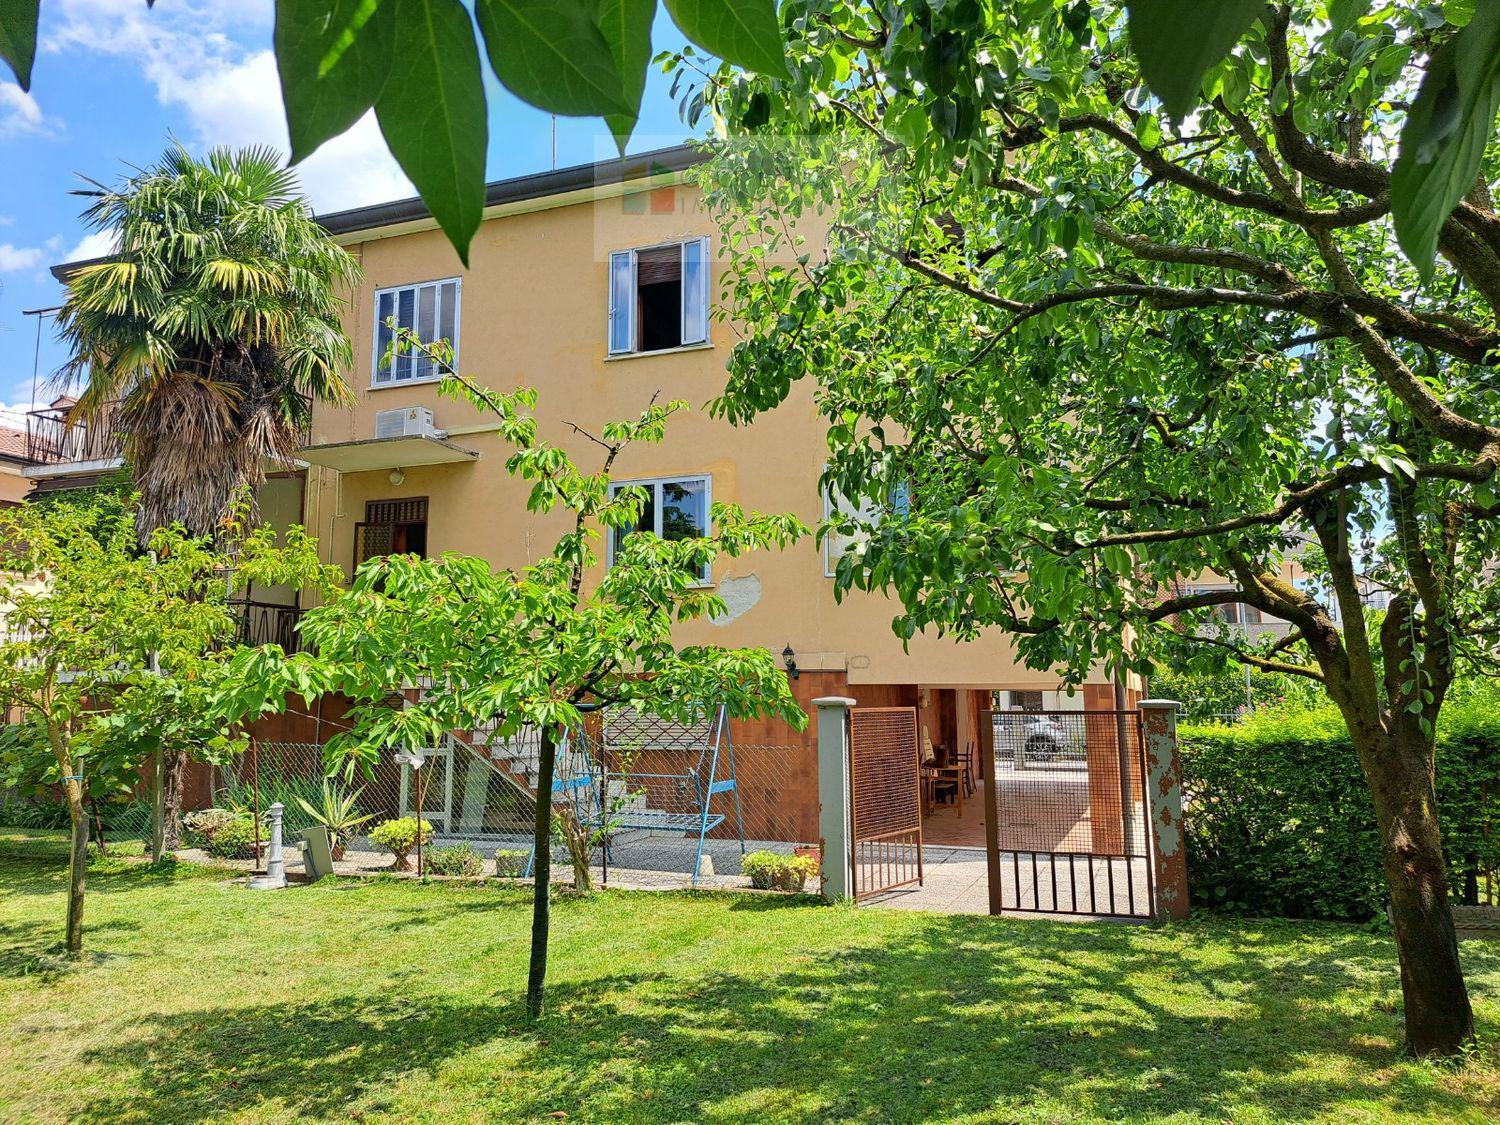 Foto 1 di 22 - Villa a schiera in vendita a Padova